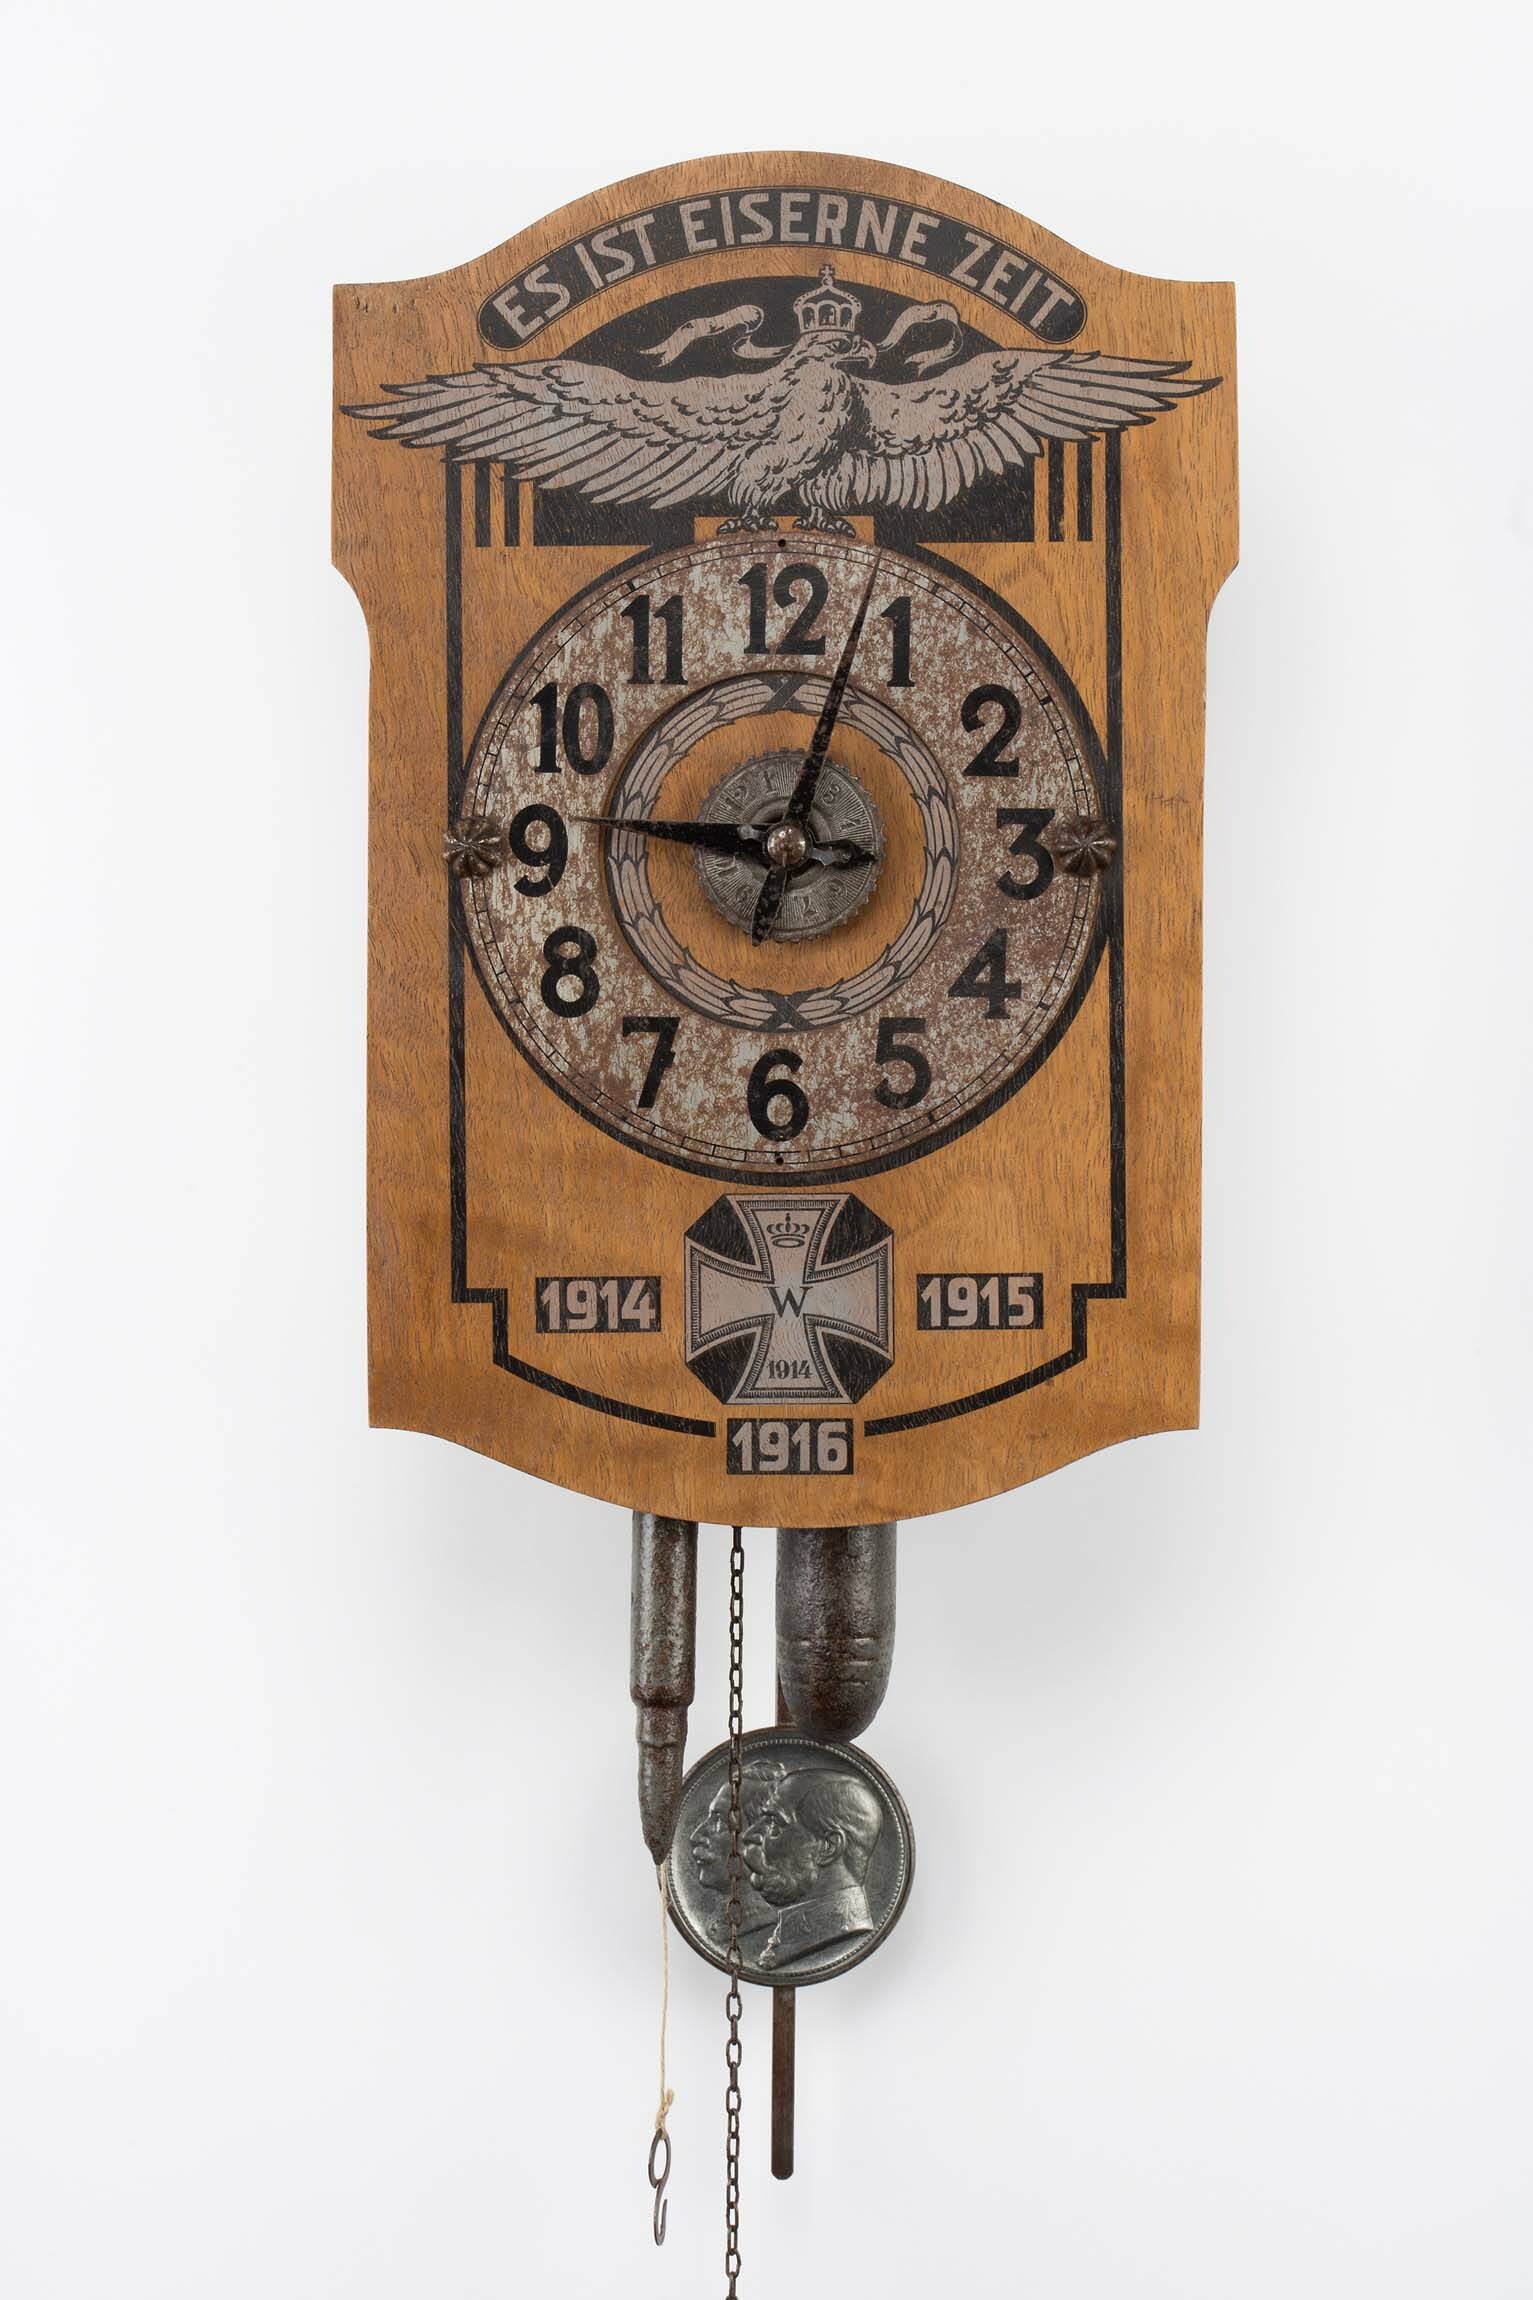 Wanduhr Es ist Eiserne Zeit, Junghans, Schramberg, 1916 (Deutsches Uhrenmuseum CC BY-SA)